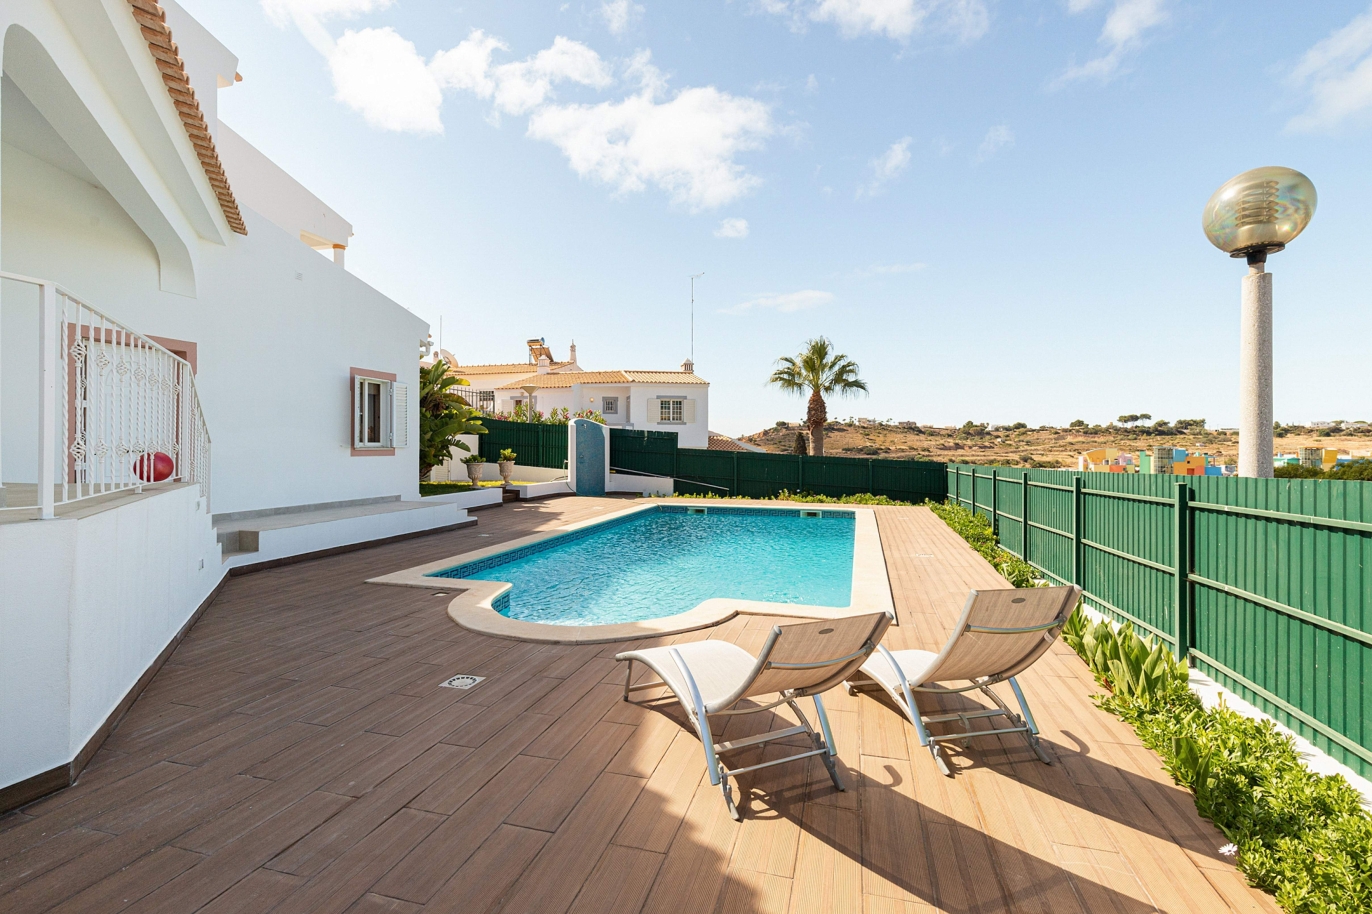 3 bedroom villa with swimming pool and garden, Albufeira, Algarve_177049